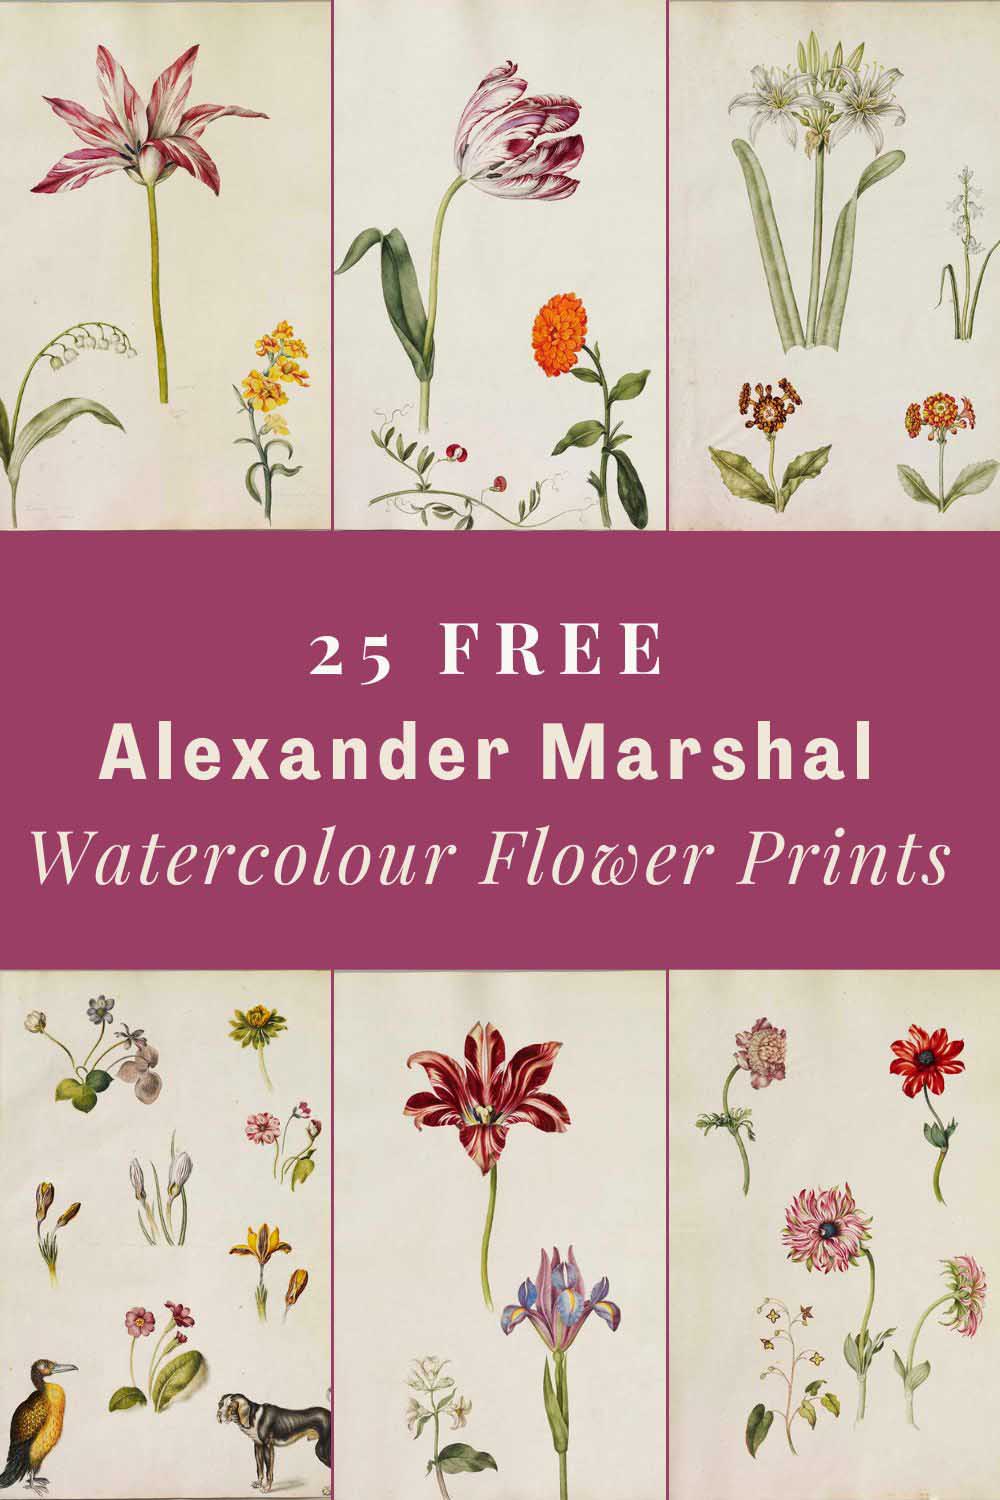 Alexander Marshal's Florilegium of watercolour flower prints